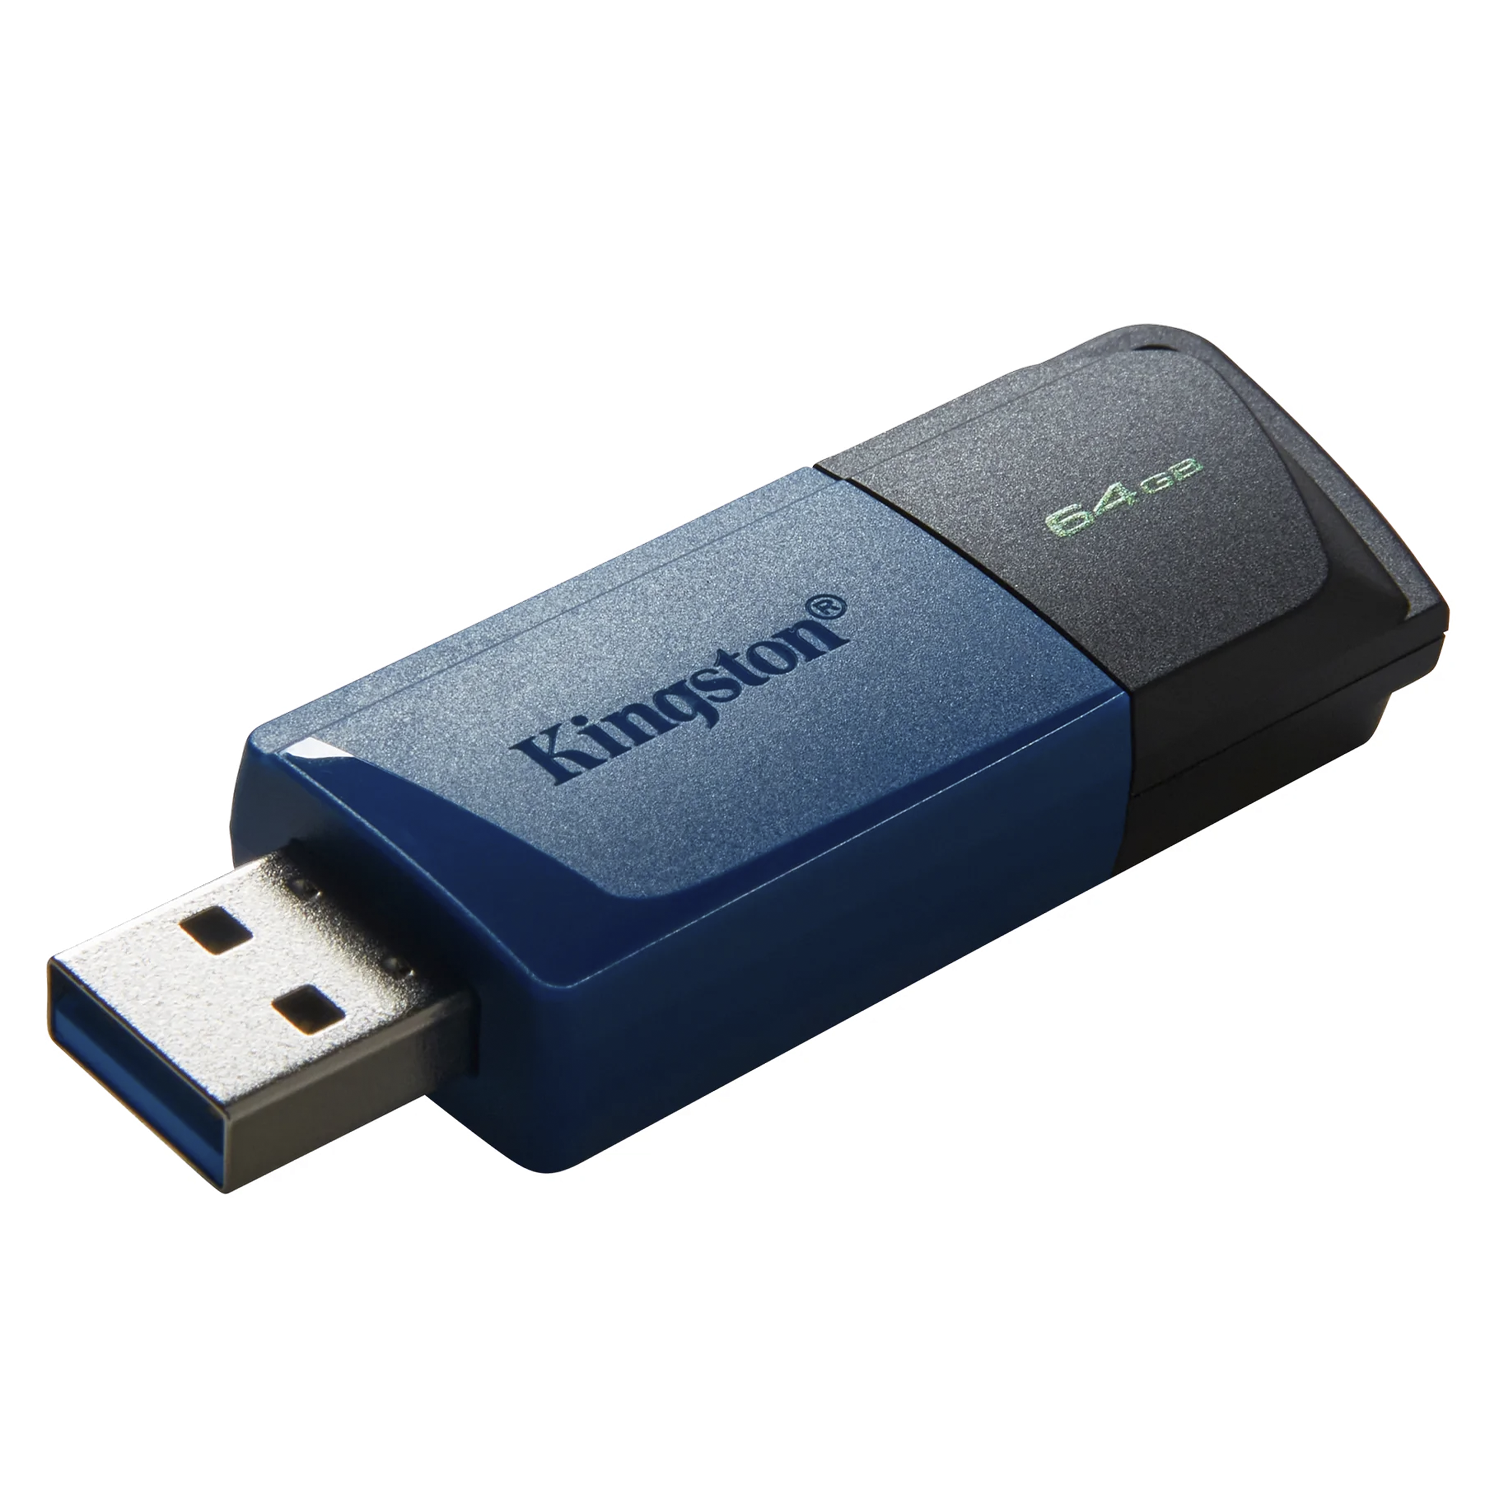 Pendrive Kingston DataTraveler Exodia 64GB USB 3.2 - DTXM/64GB